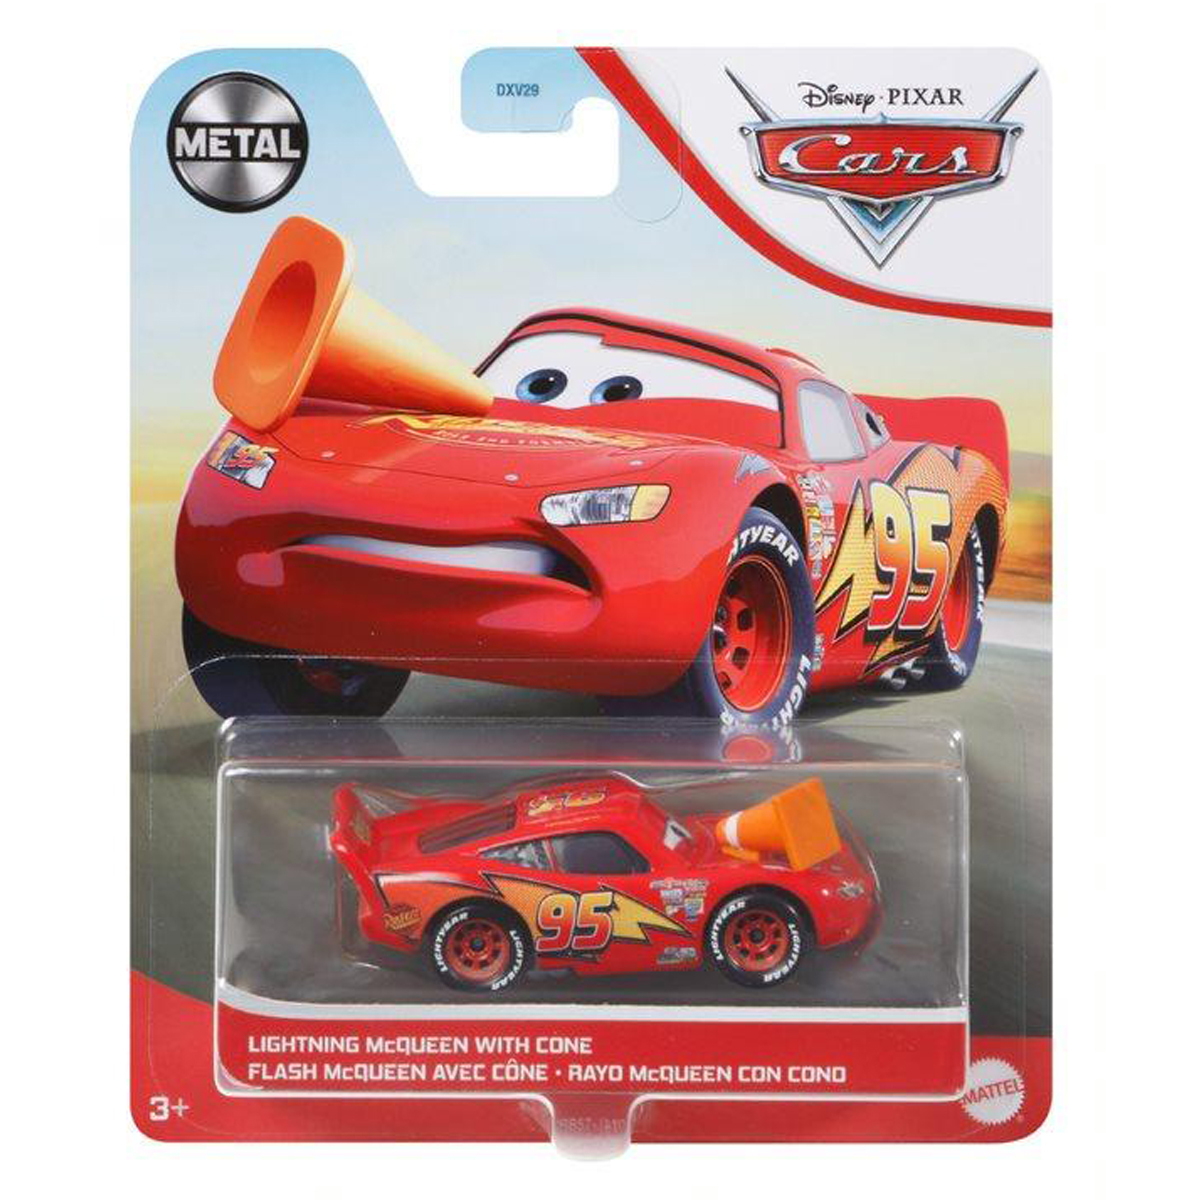 Disney Pixar Cars Lightning McQueen with Cone 1:55